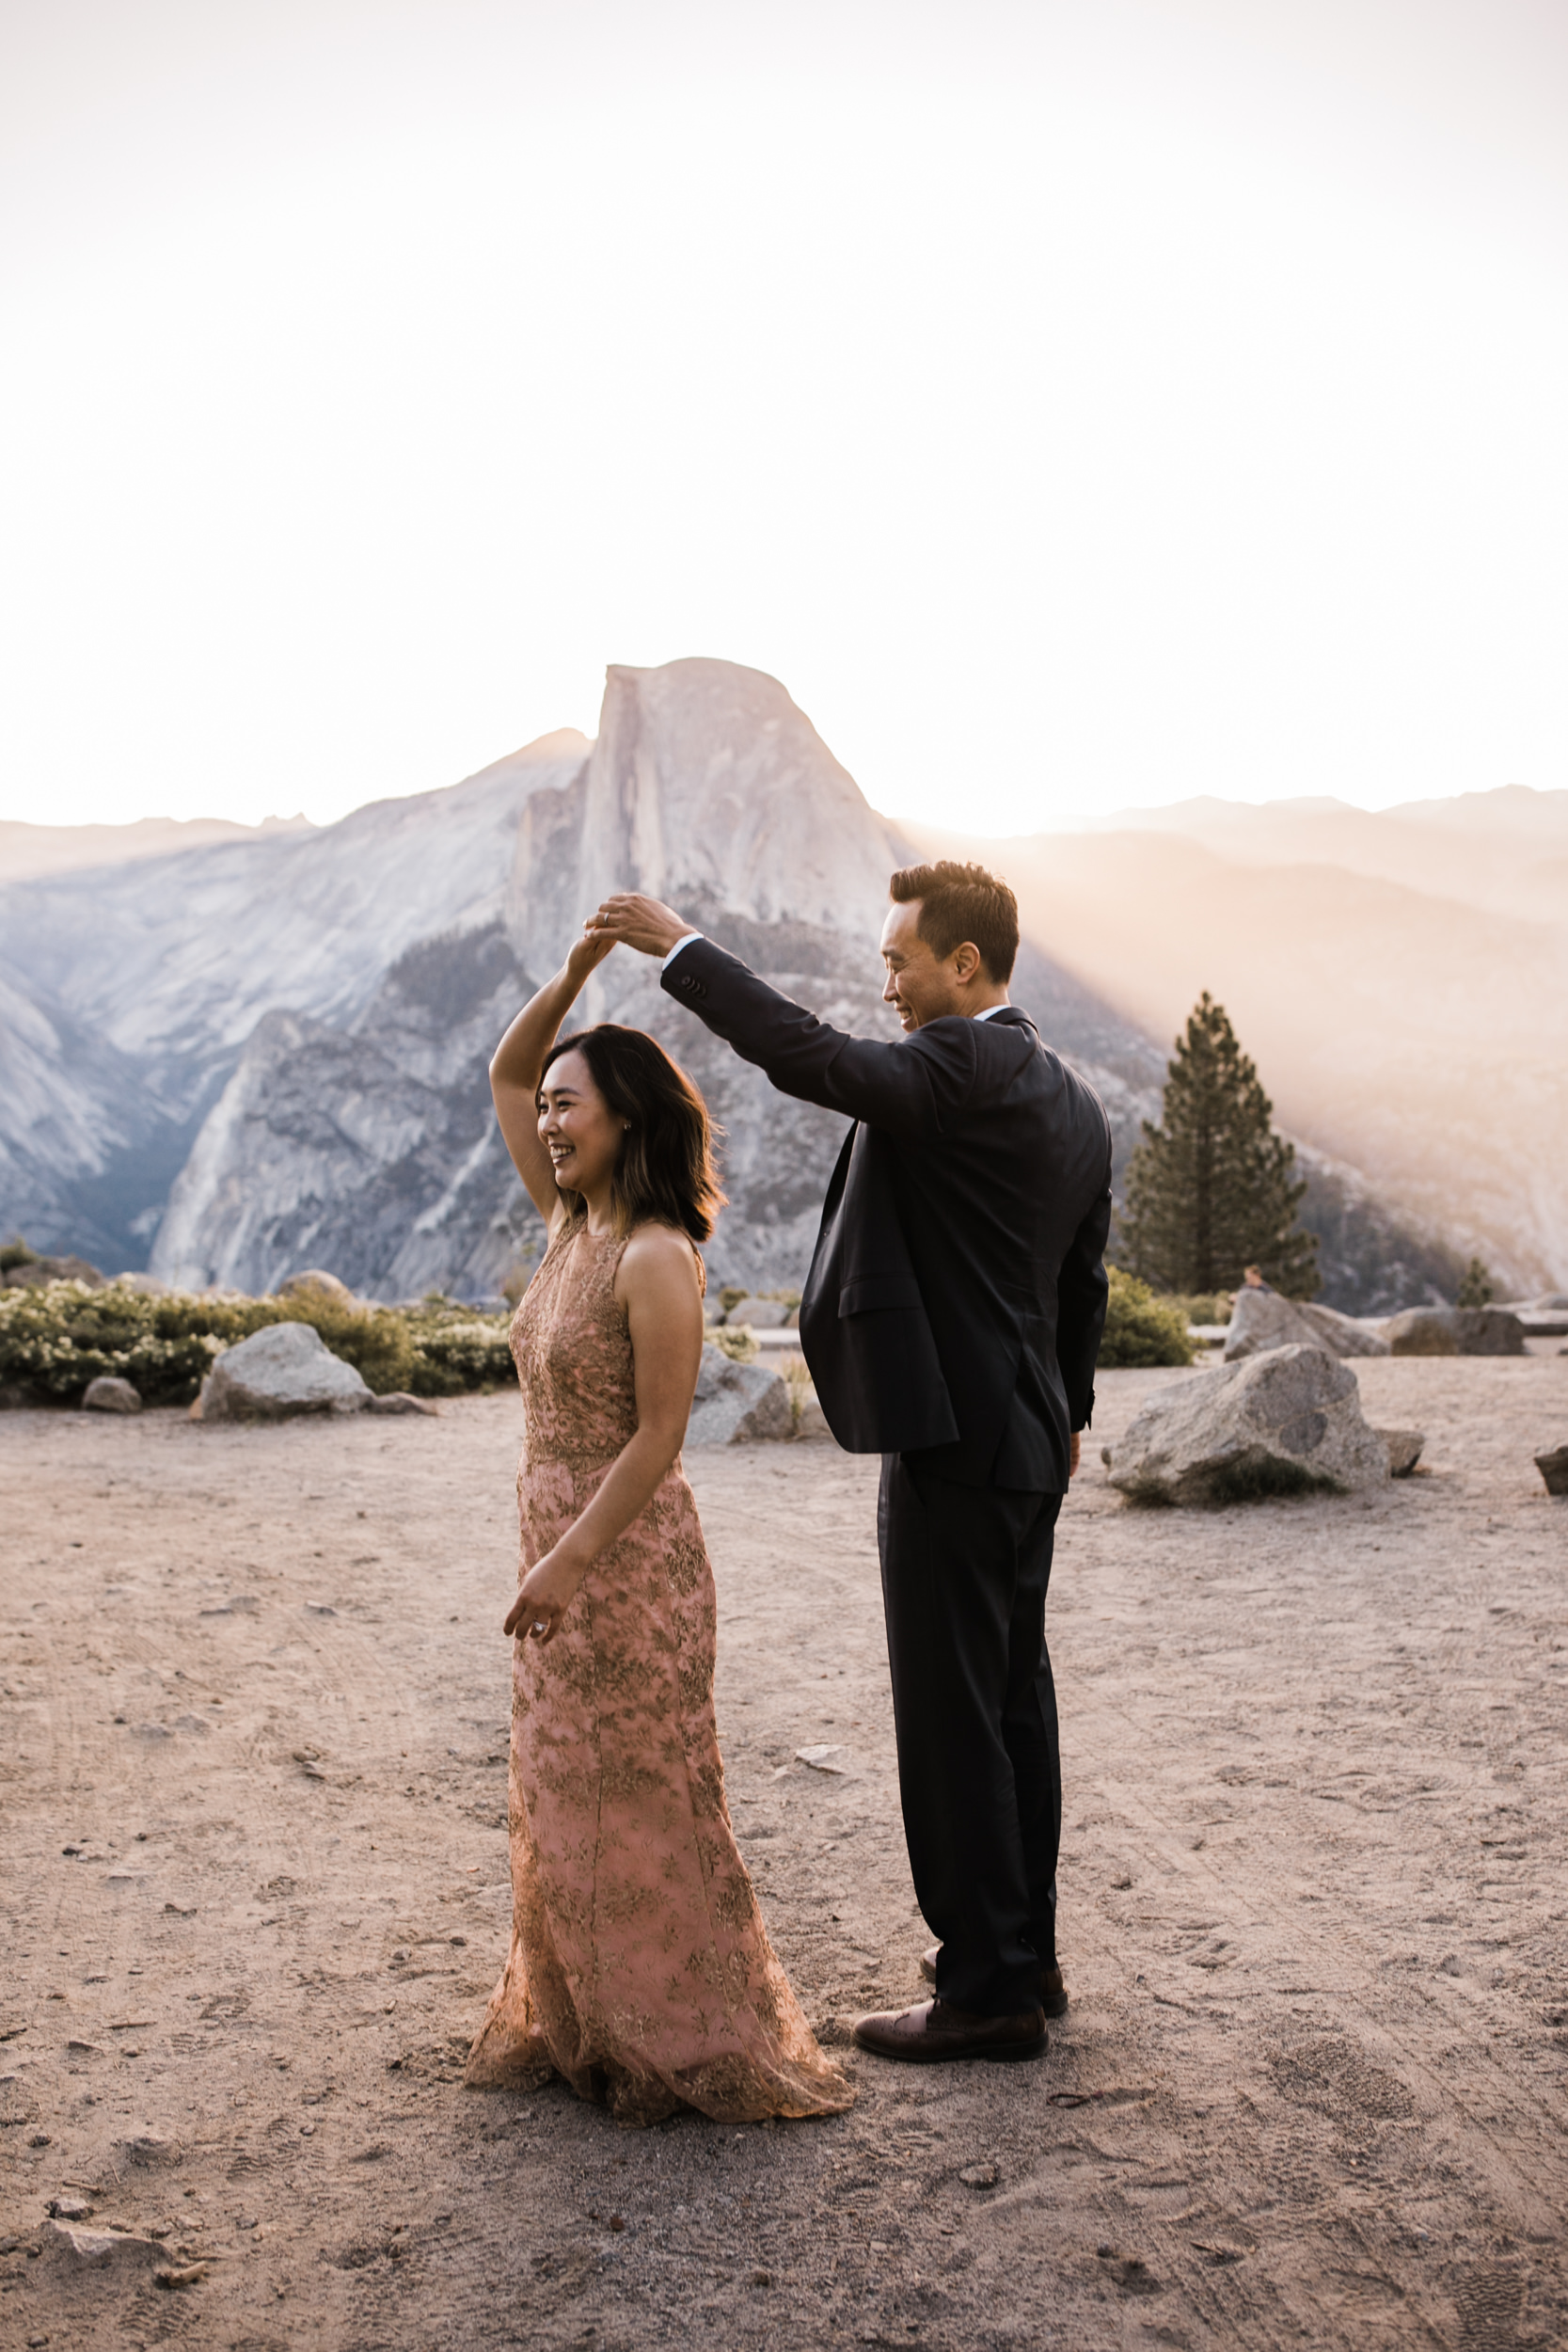 michelle + doug's adventure session at glacier point | 10 year wedding anniversary celebration | yosemite elopement inspiration | the hearnes adventure photography